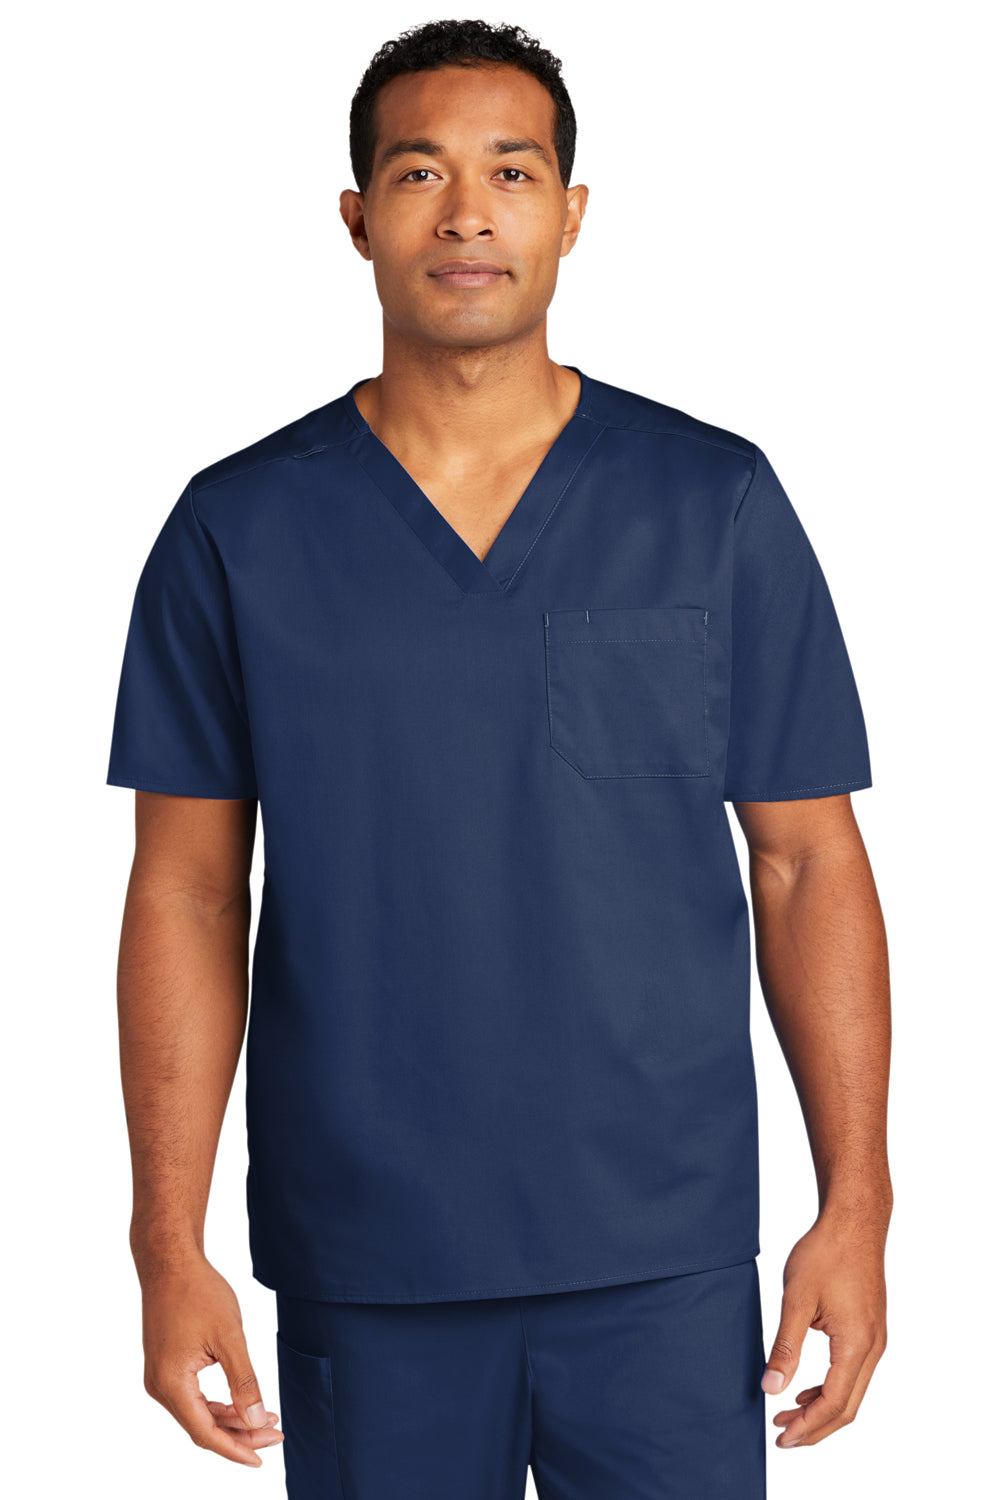 Wonderwink WW3160 WorkFlex Short Sleeve V-Neck Shirt w/ Pocket Navy Blue Front